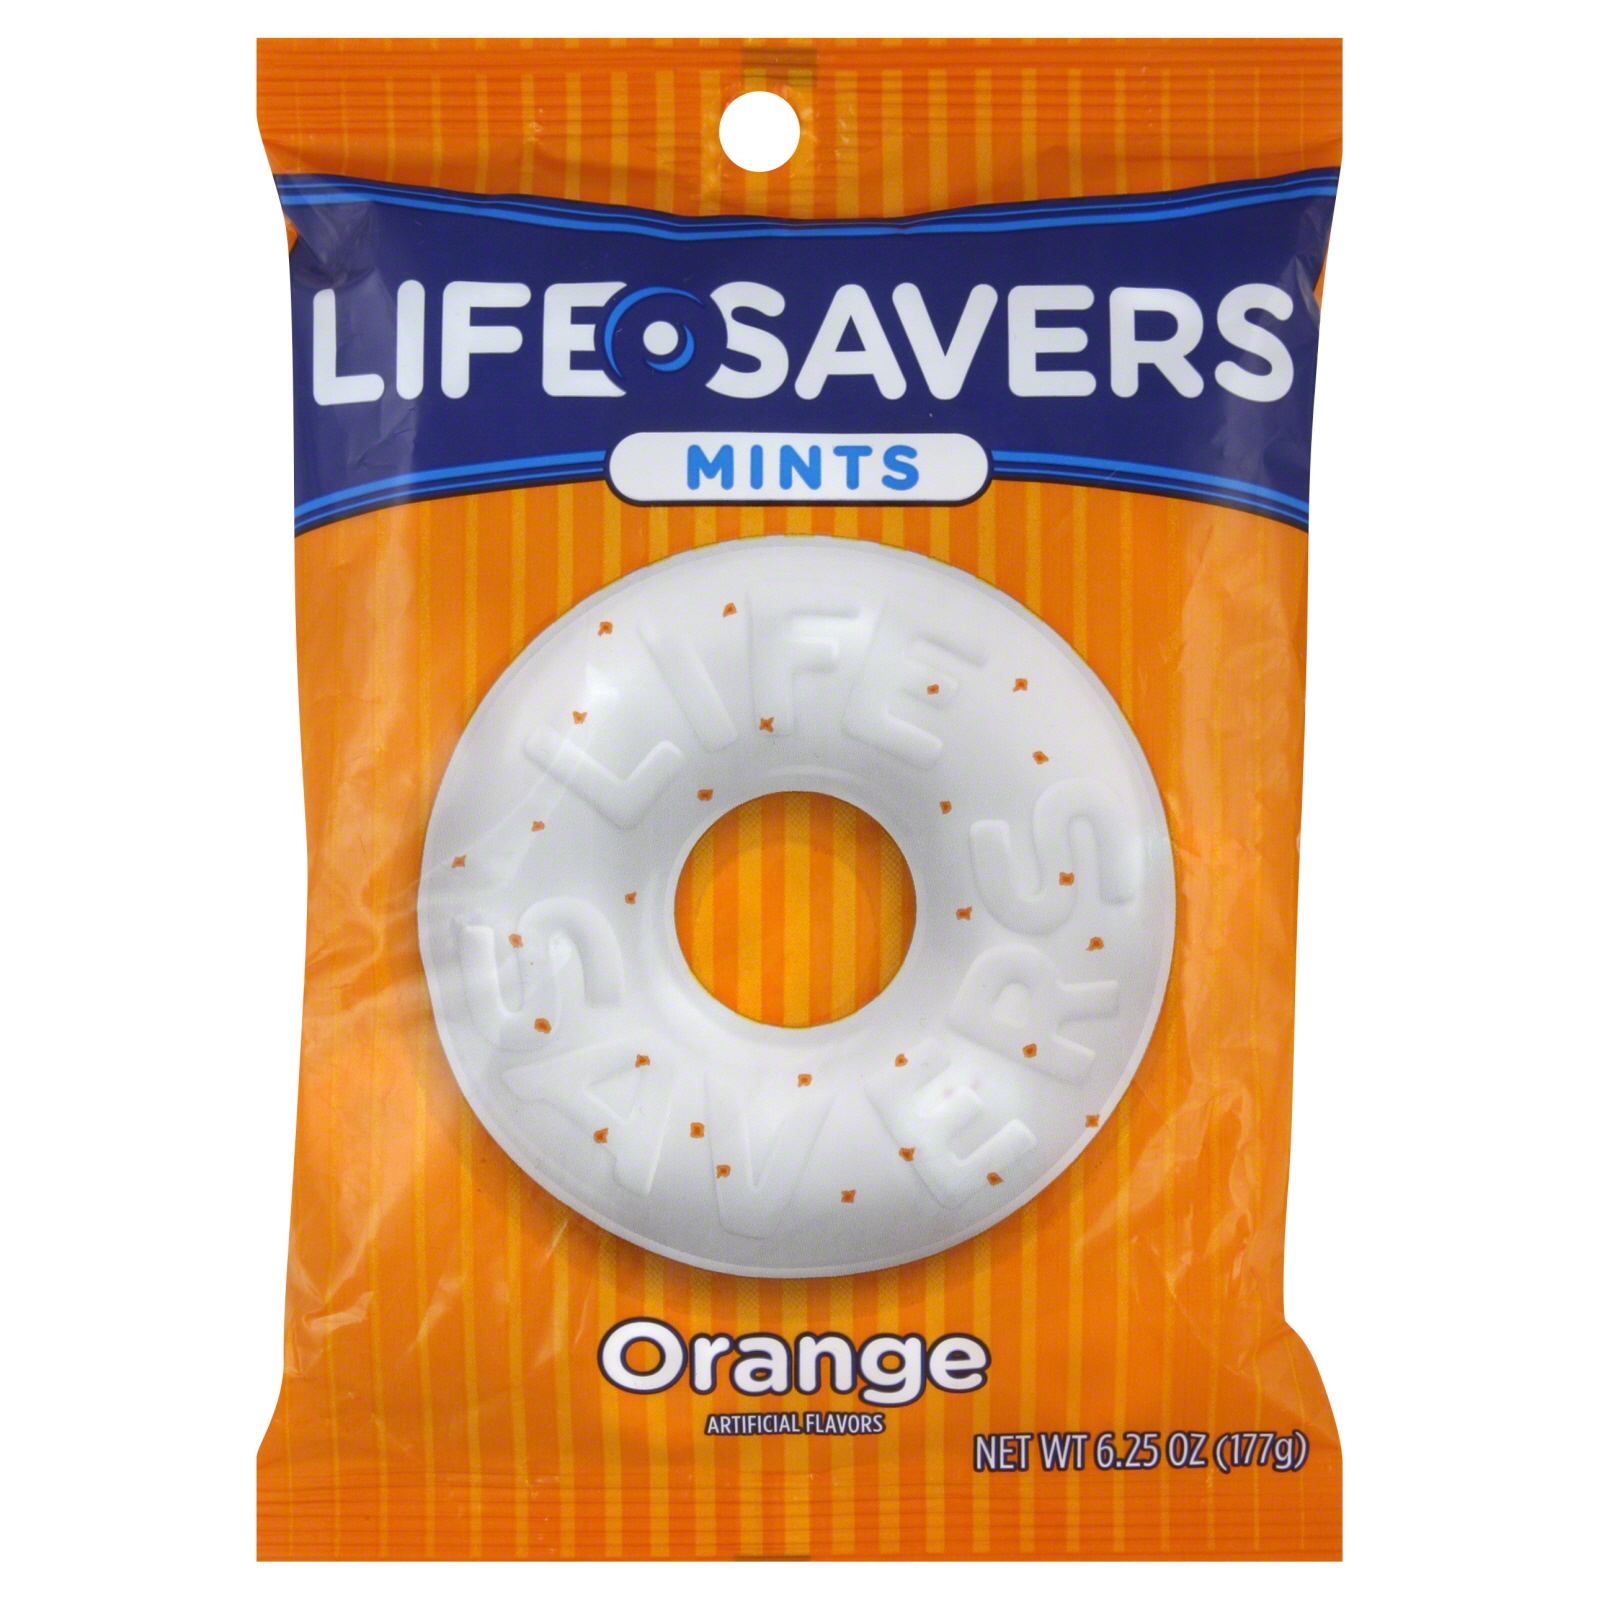 LifeSavers Mints, Orange, 6.25 oz (177 g)